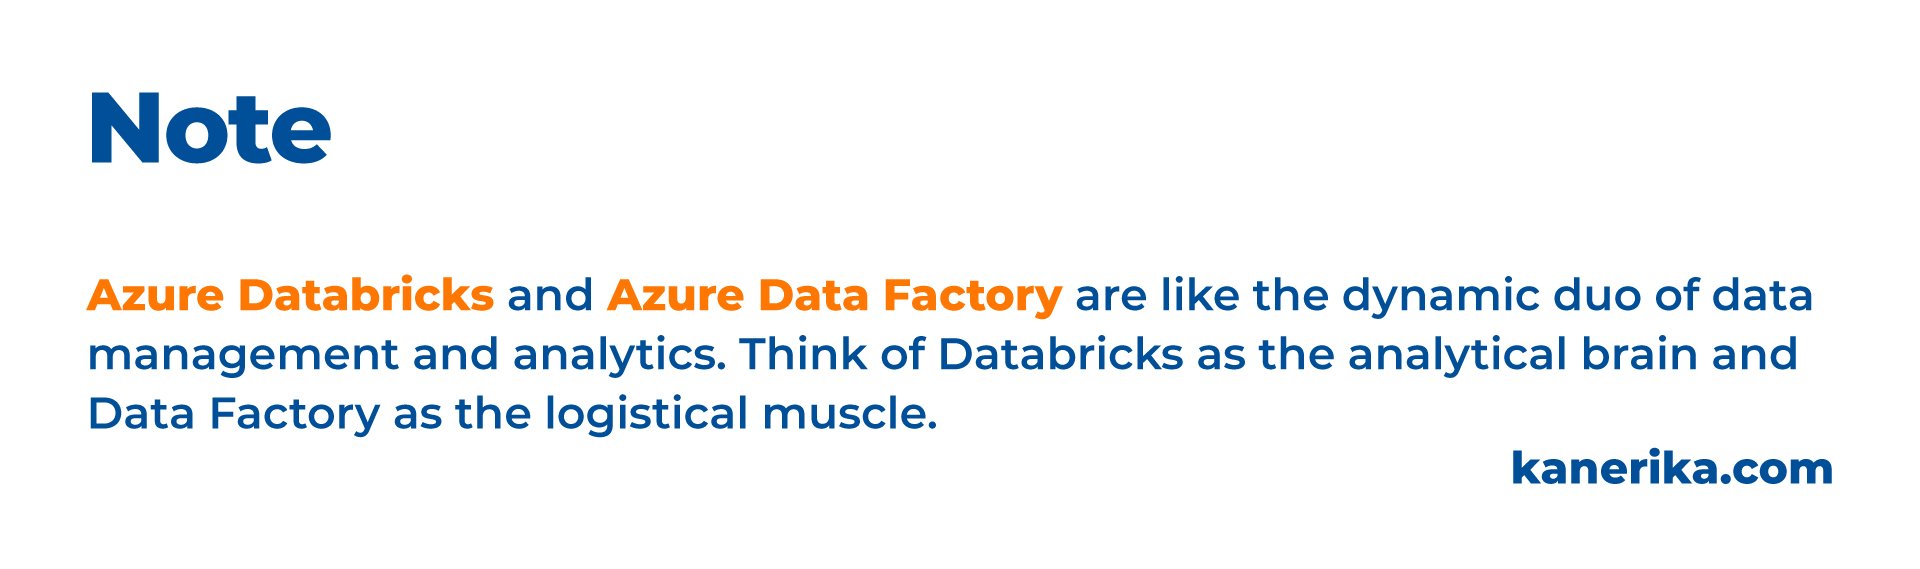 Azure Databricks and Azure Data Factory_Kanerika